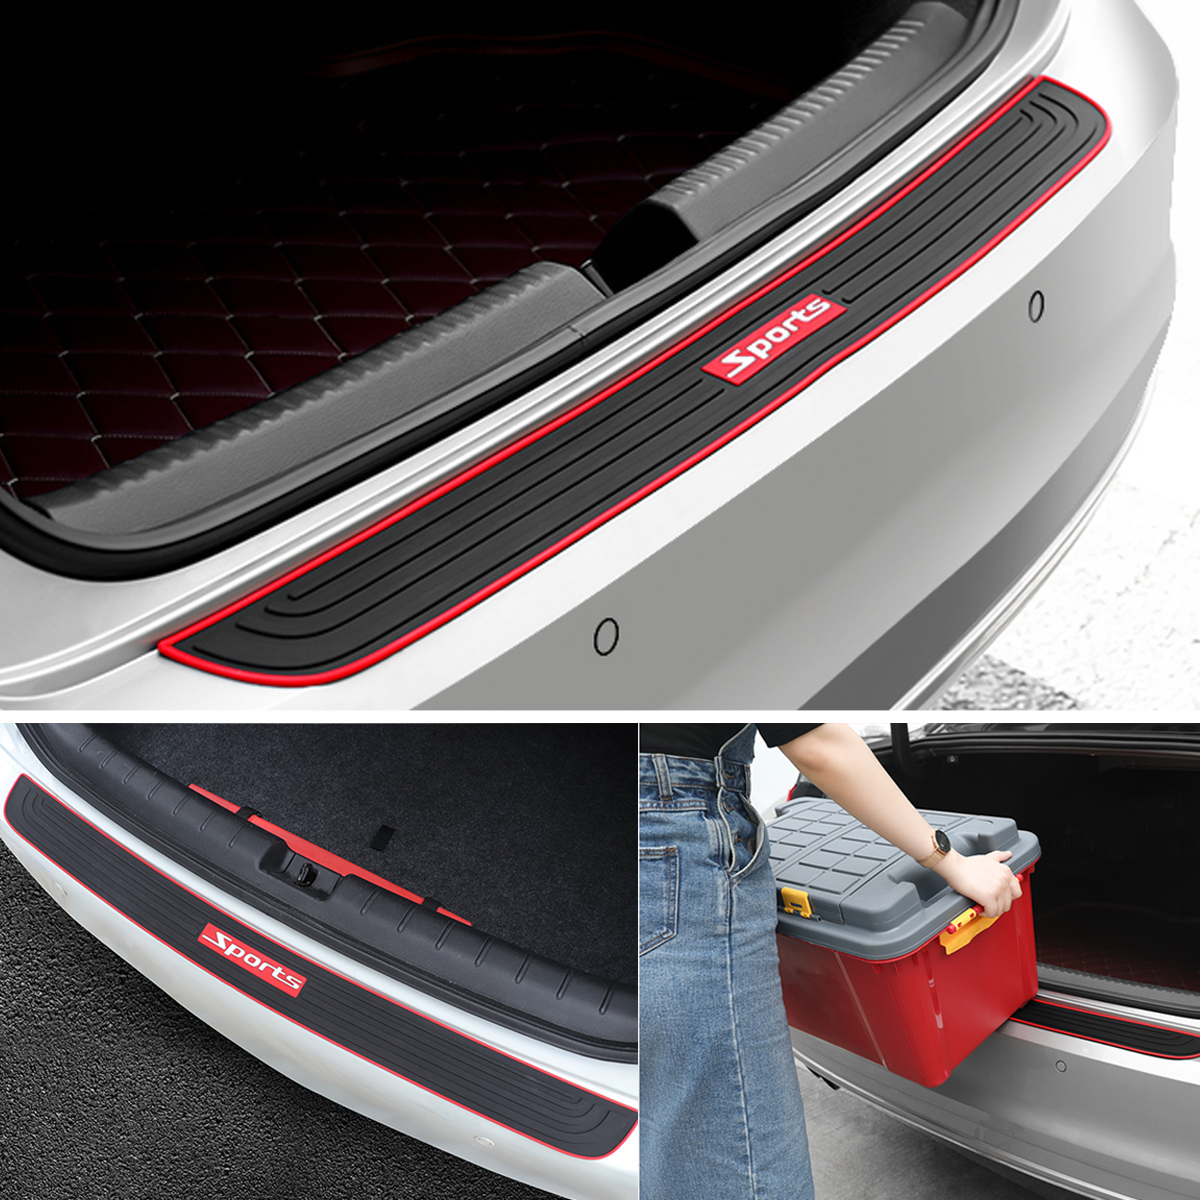 Black Rubber Car Rear Sill Plate Guard Bumper Protector Pad Cover Anti-Scratch